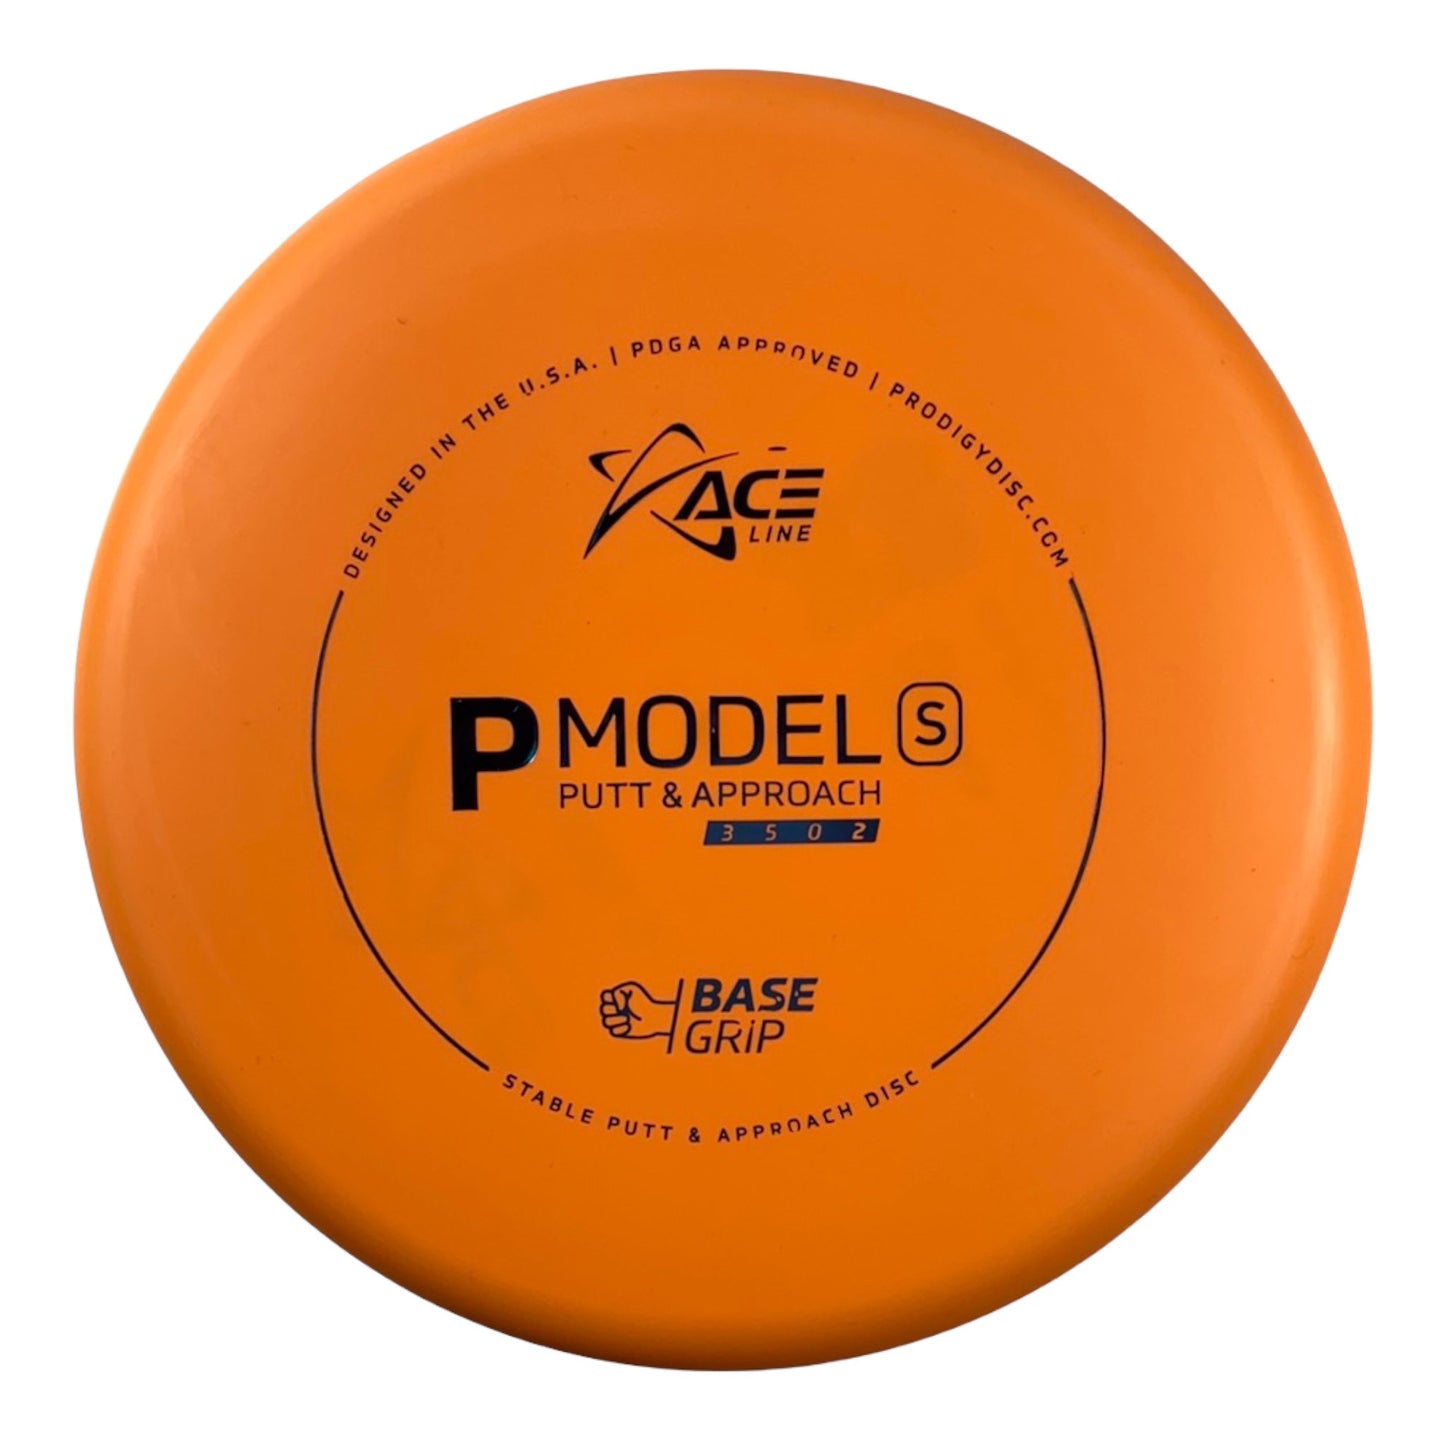 Prodigy Disc P Model S | Base Grip | Orange/Blue 174g Disc Golf